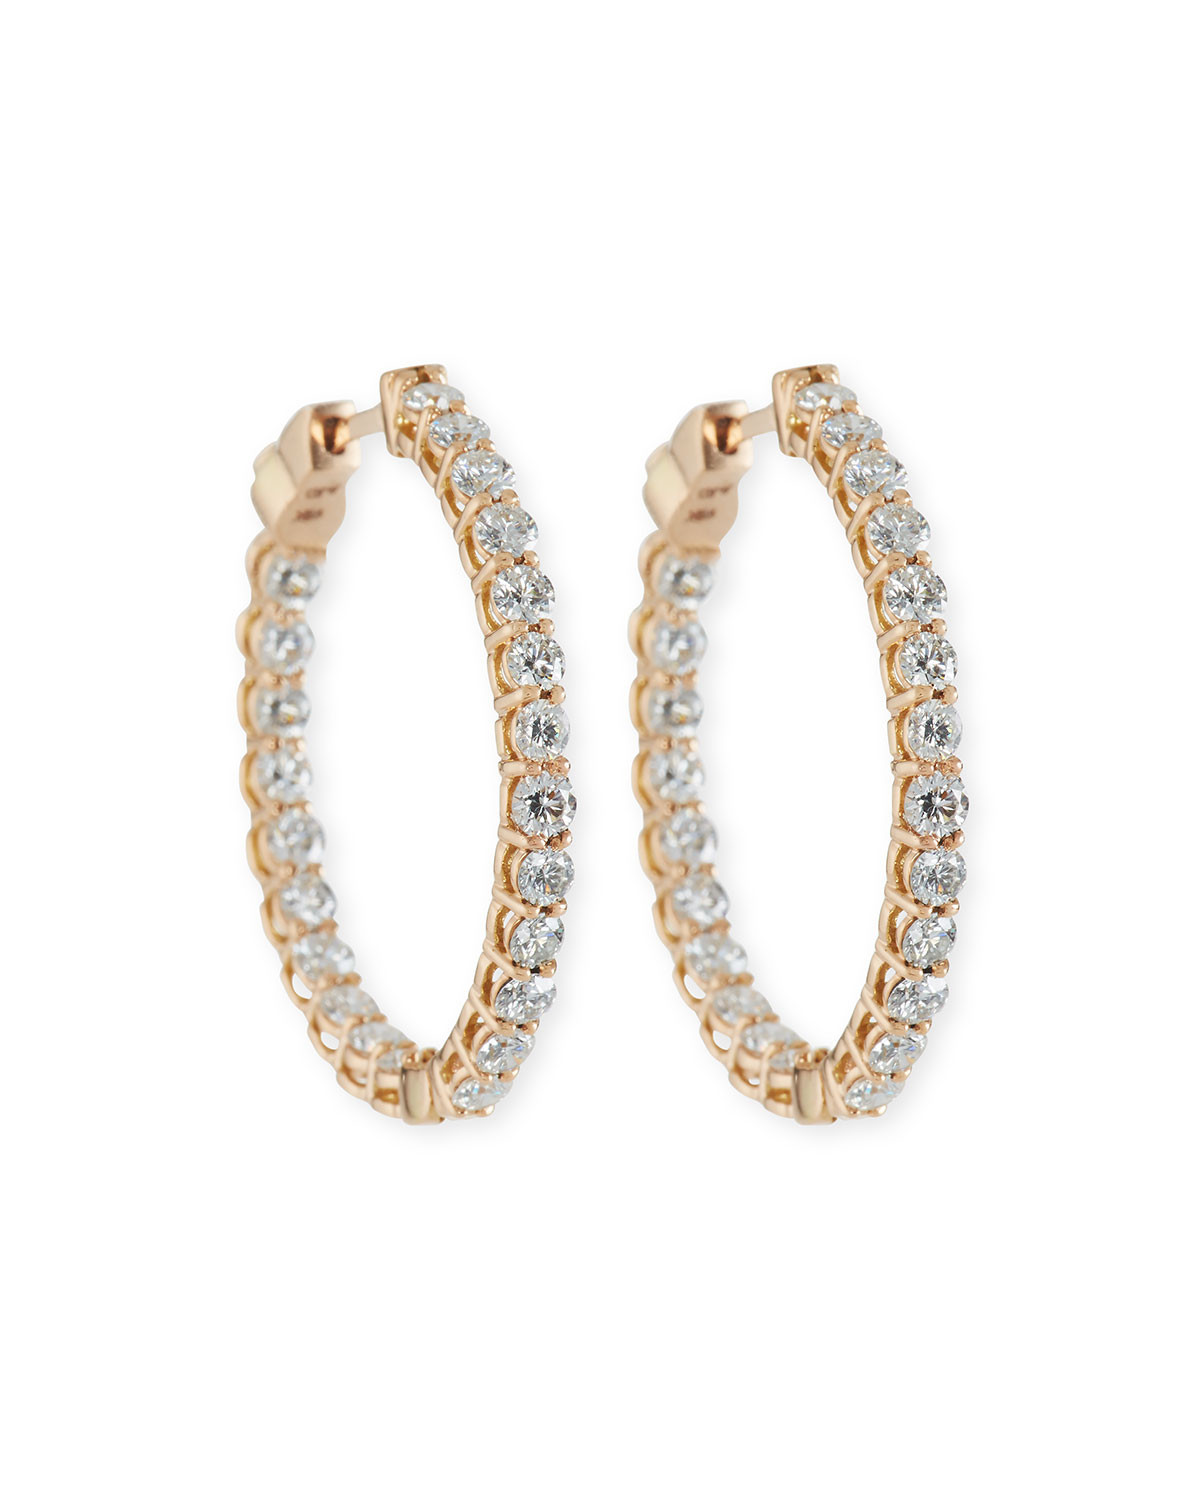 Neiman Marcus Earrings
 American Jewelery Designs Small Diamond Hoop Earrings in